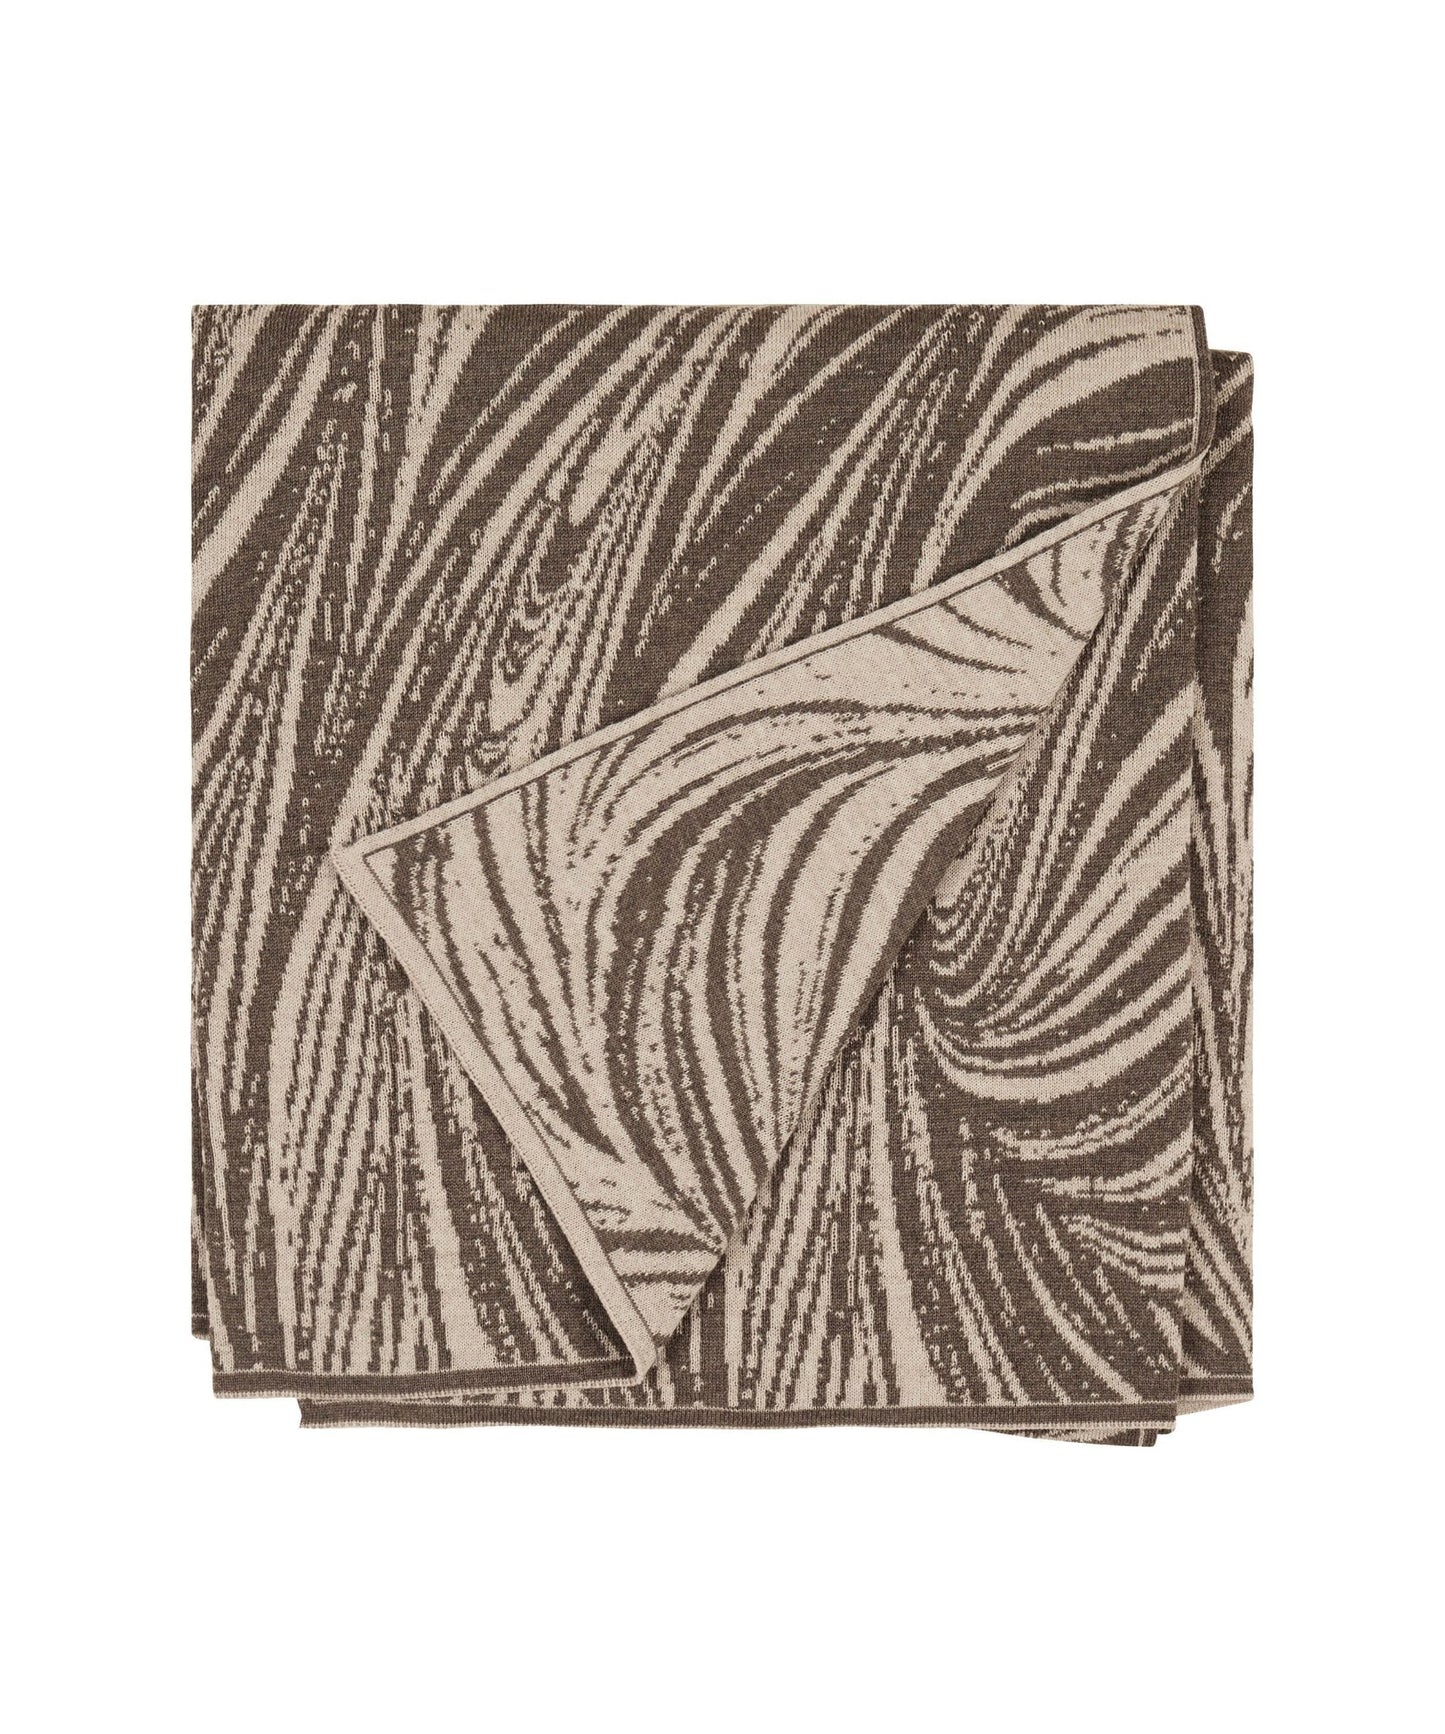 Swirl Merino Wool Blanket - Concrete